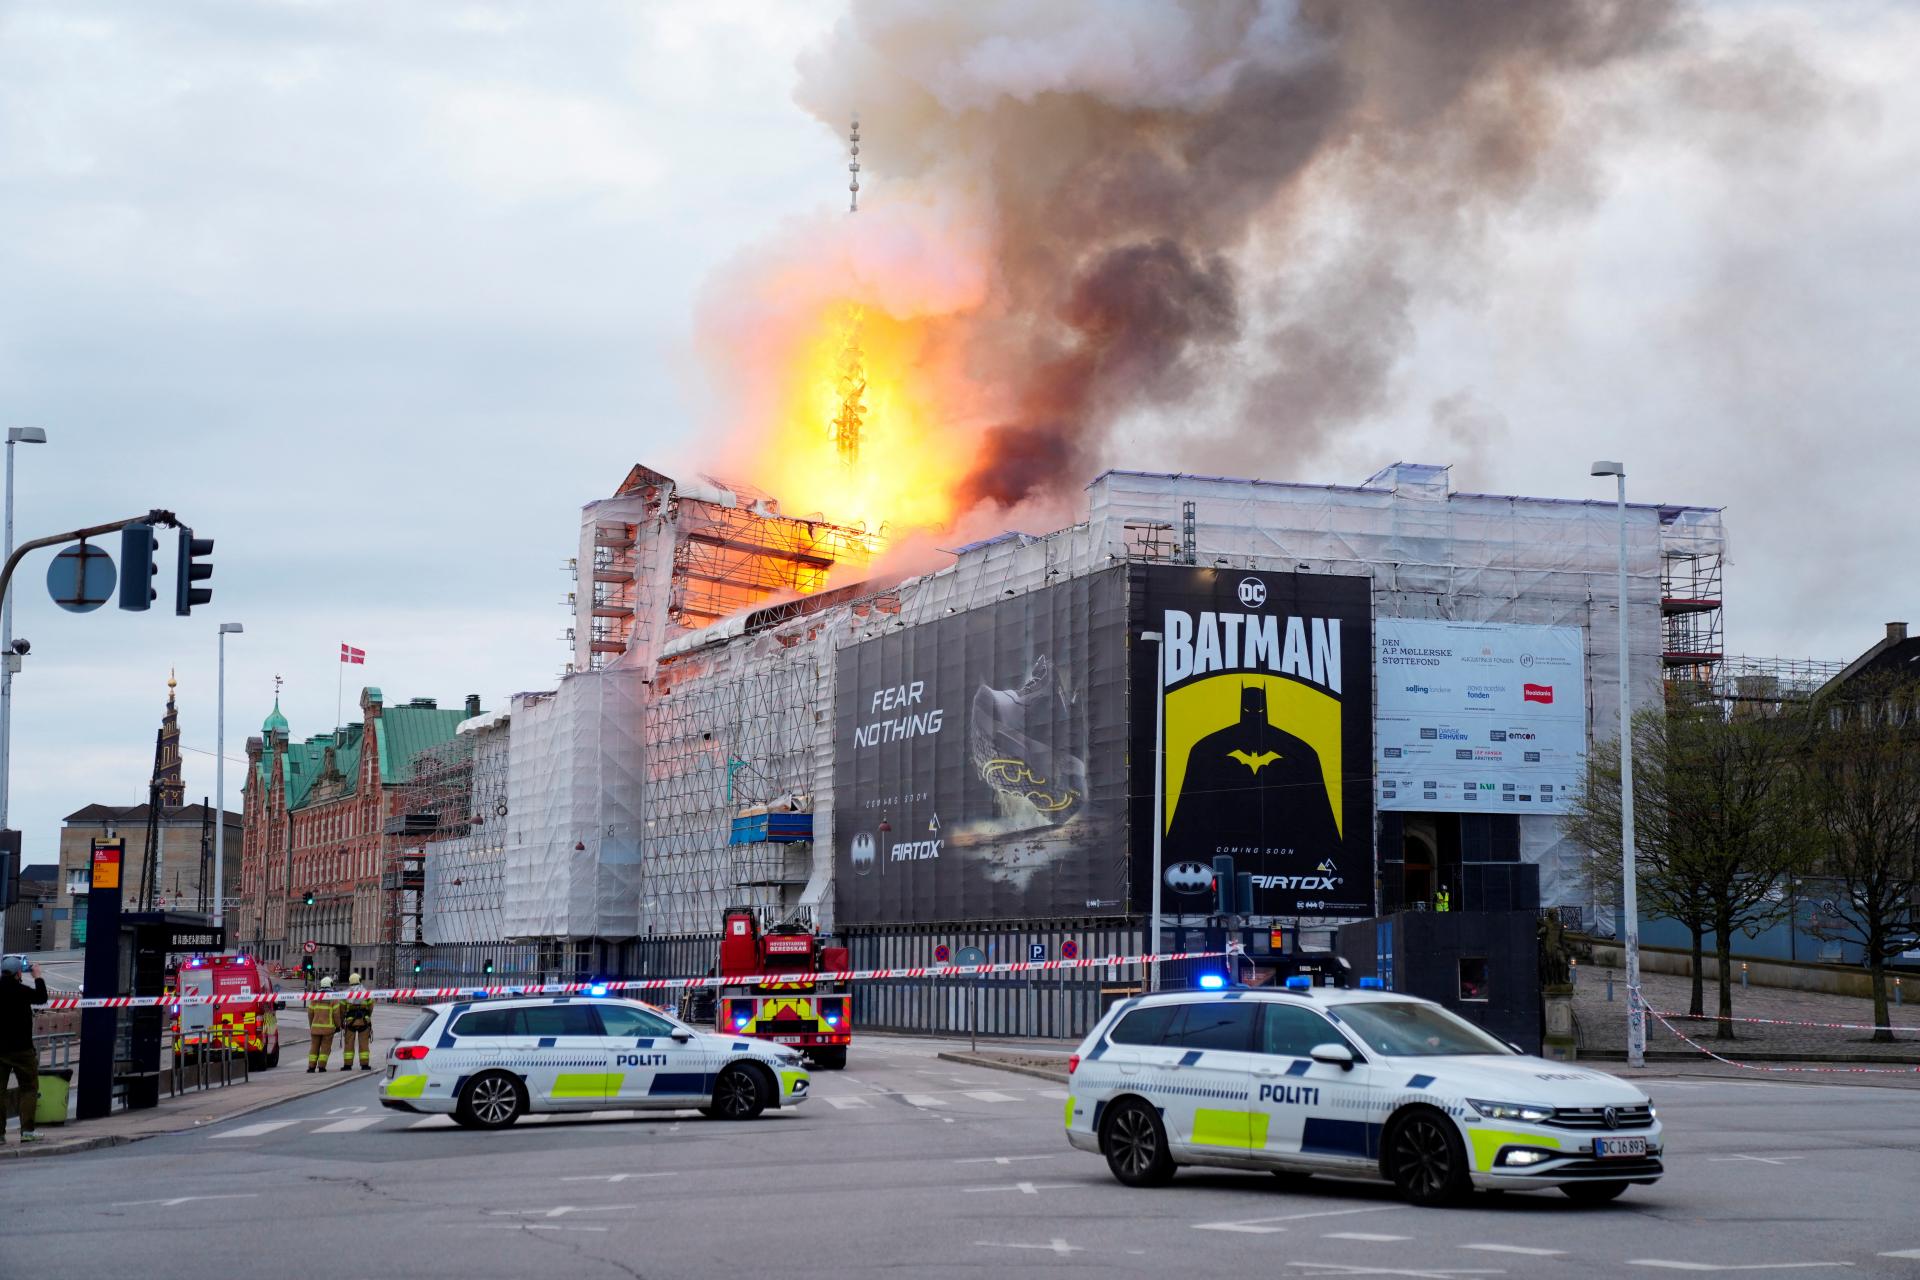 VIDEO: Ikonu Kodane zachvátil požiar, jej veža sa v plameňoch zrútila